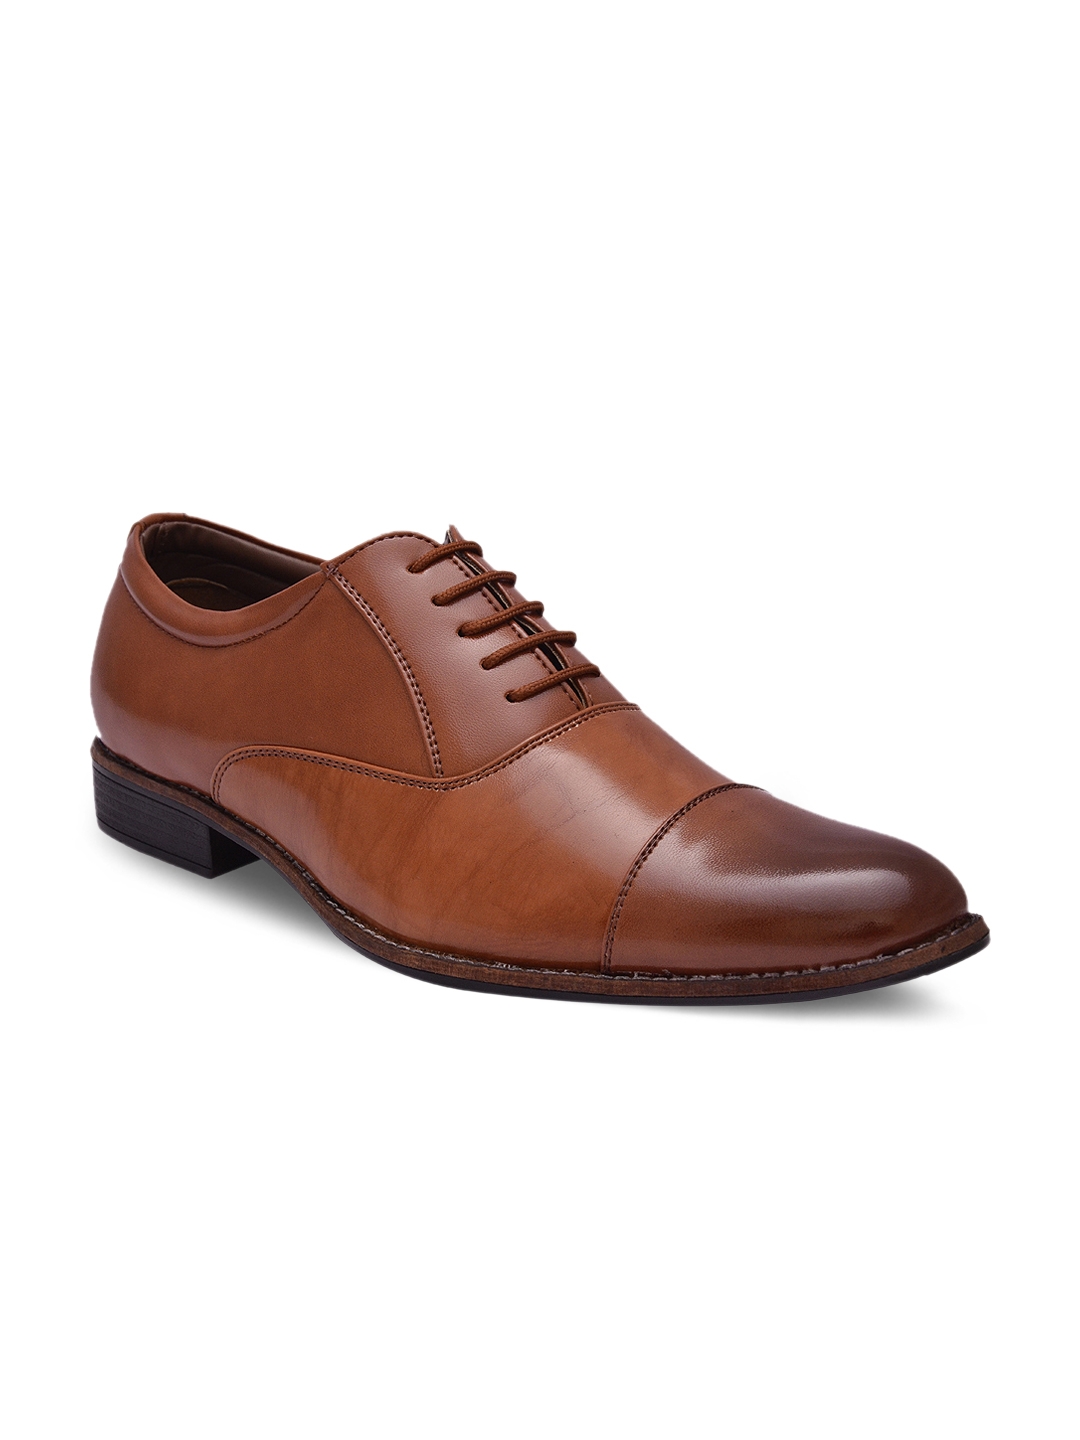 Sir Corbett Men Tan Brown Formal Shoes 